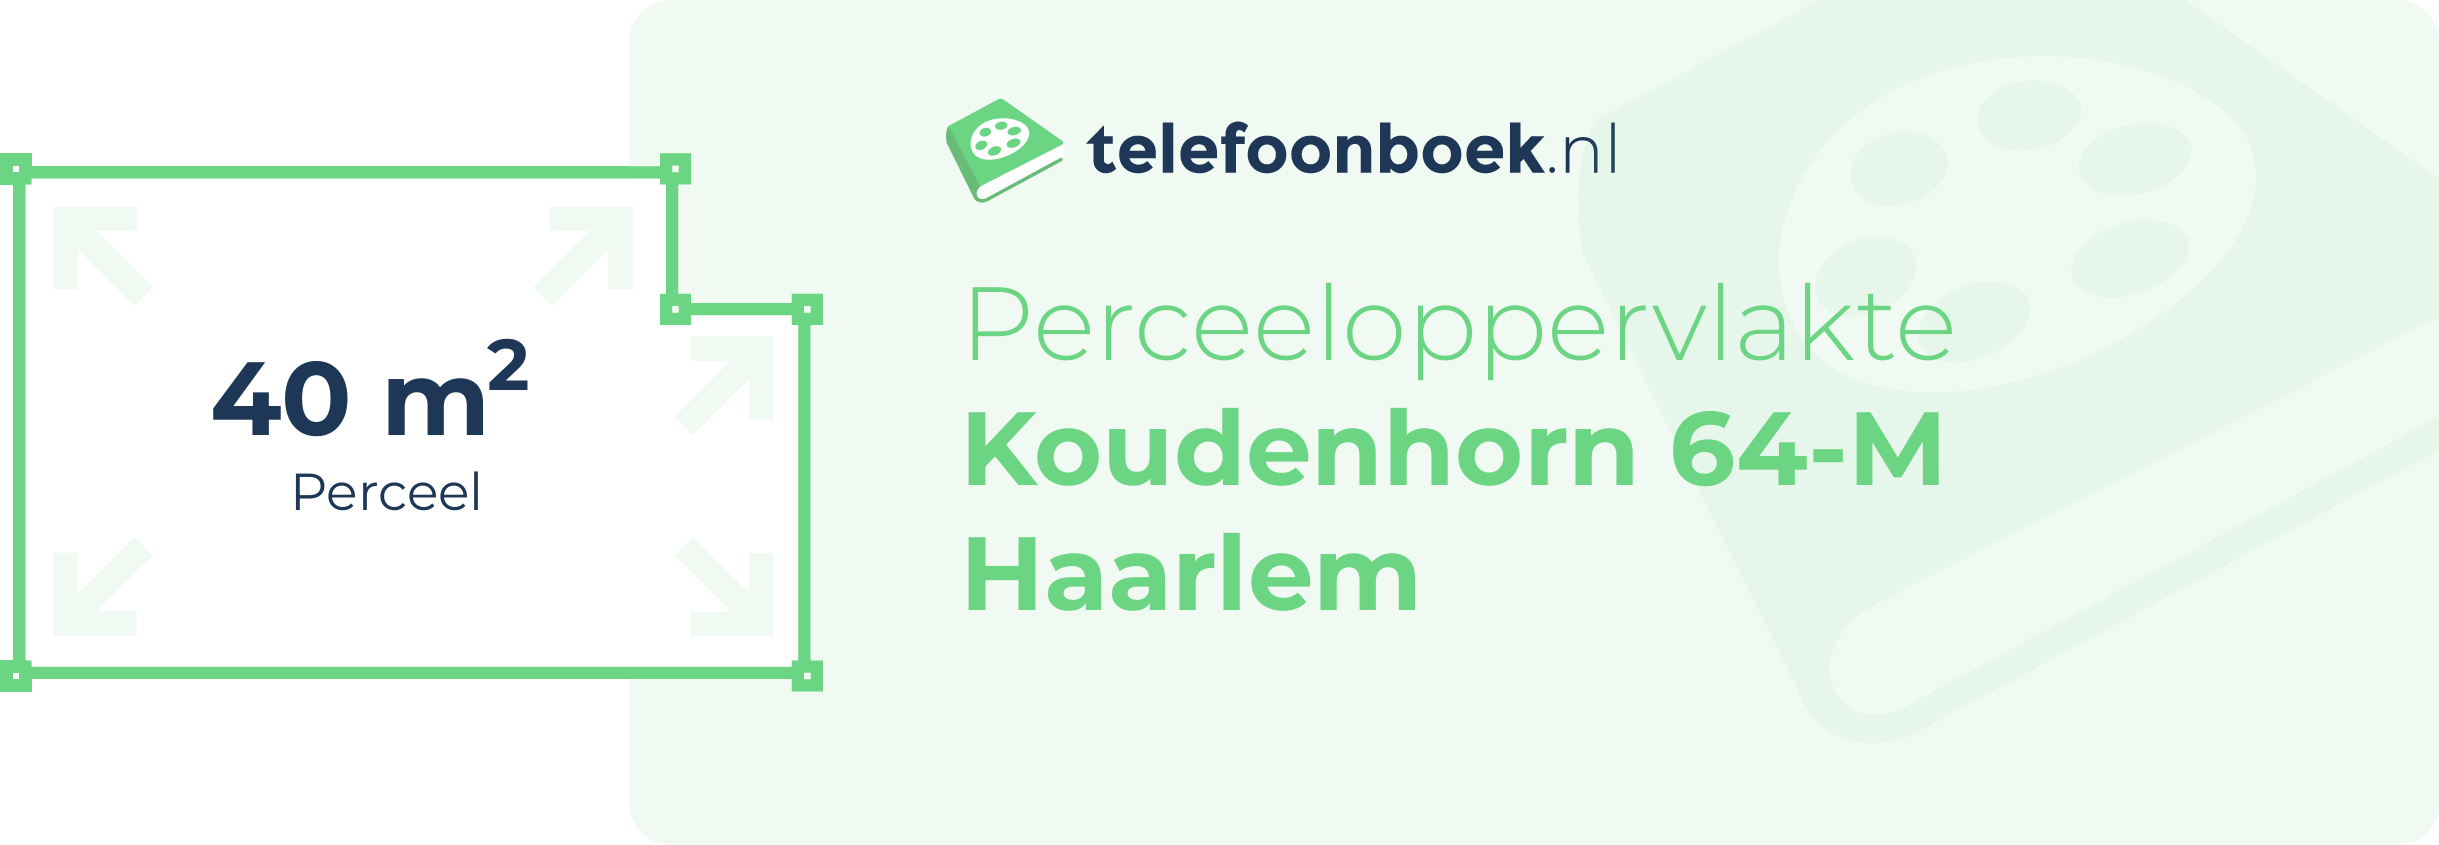 Perceeloppervlakte Koudenhorn 64-M Haarlem